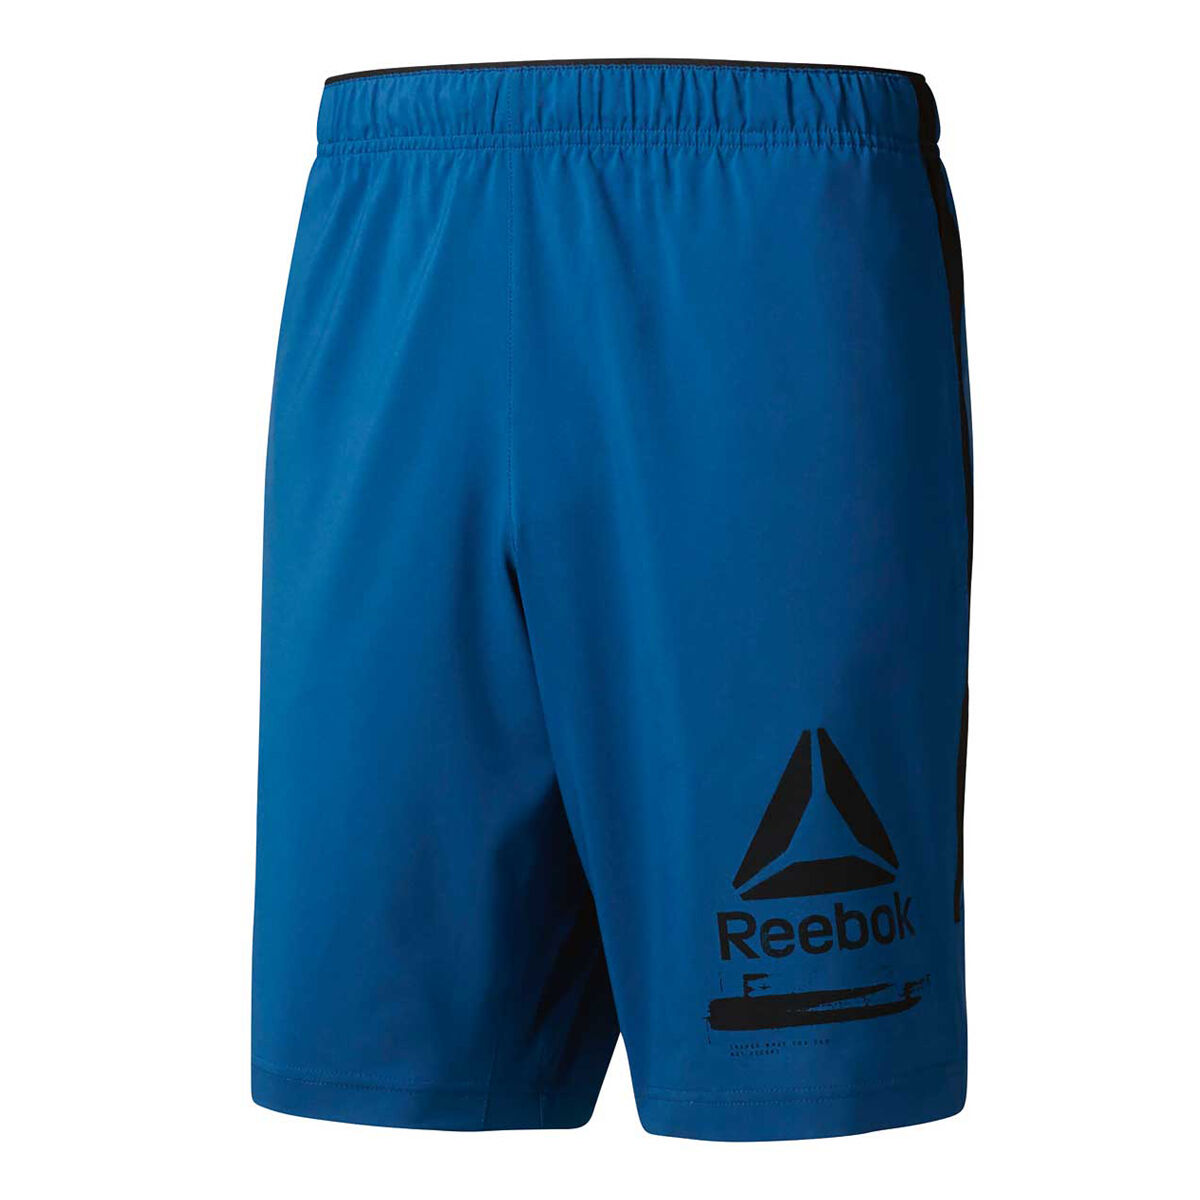 reebok shorts blue